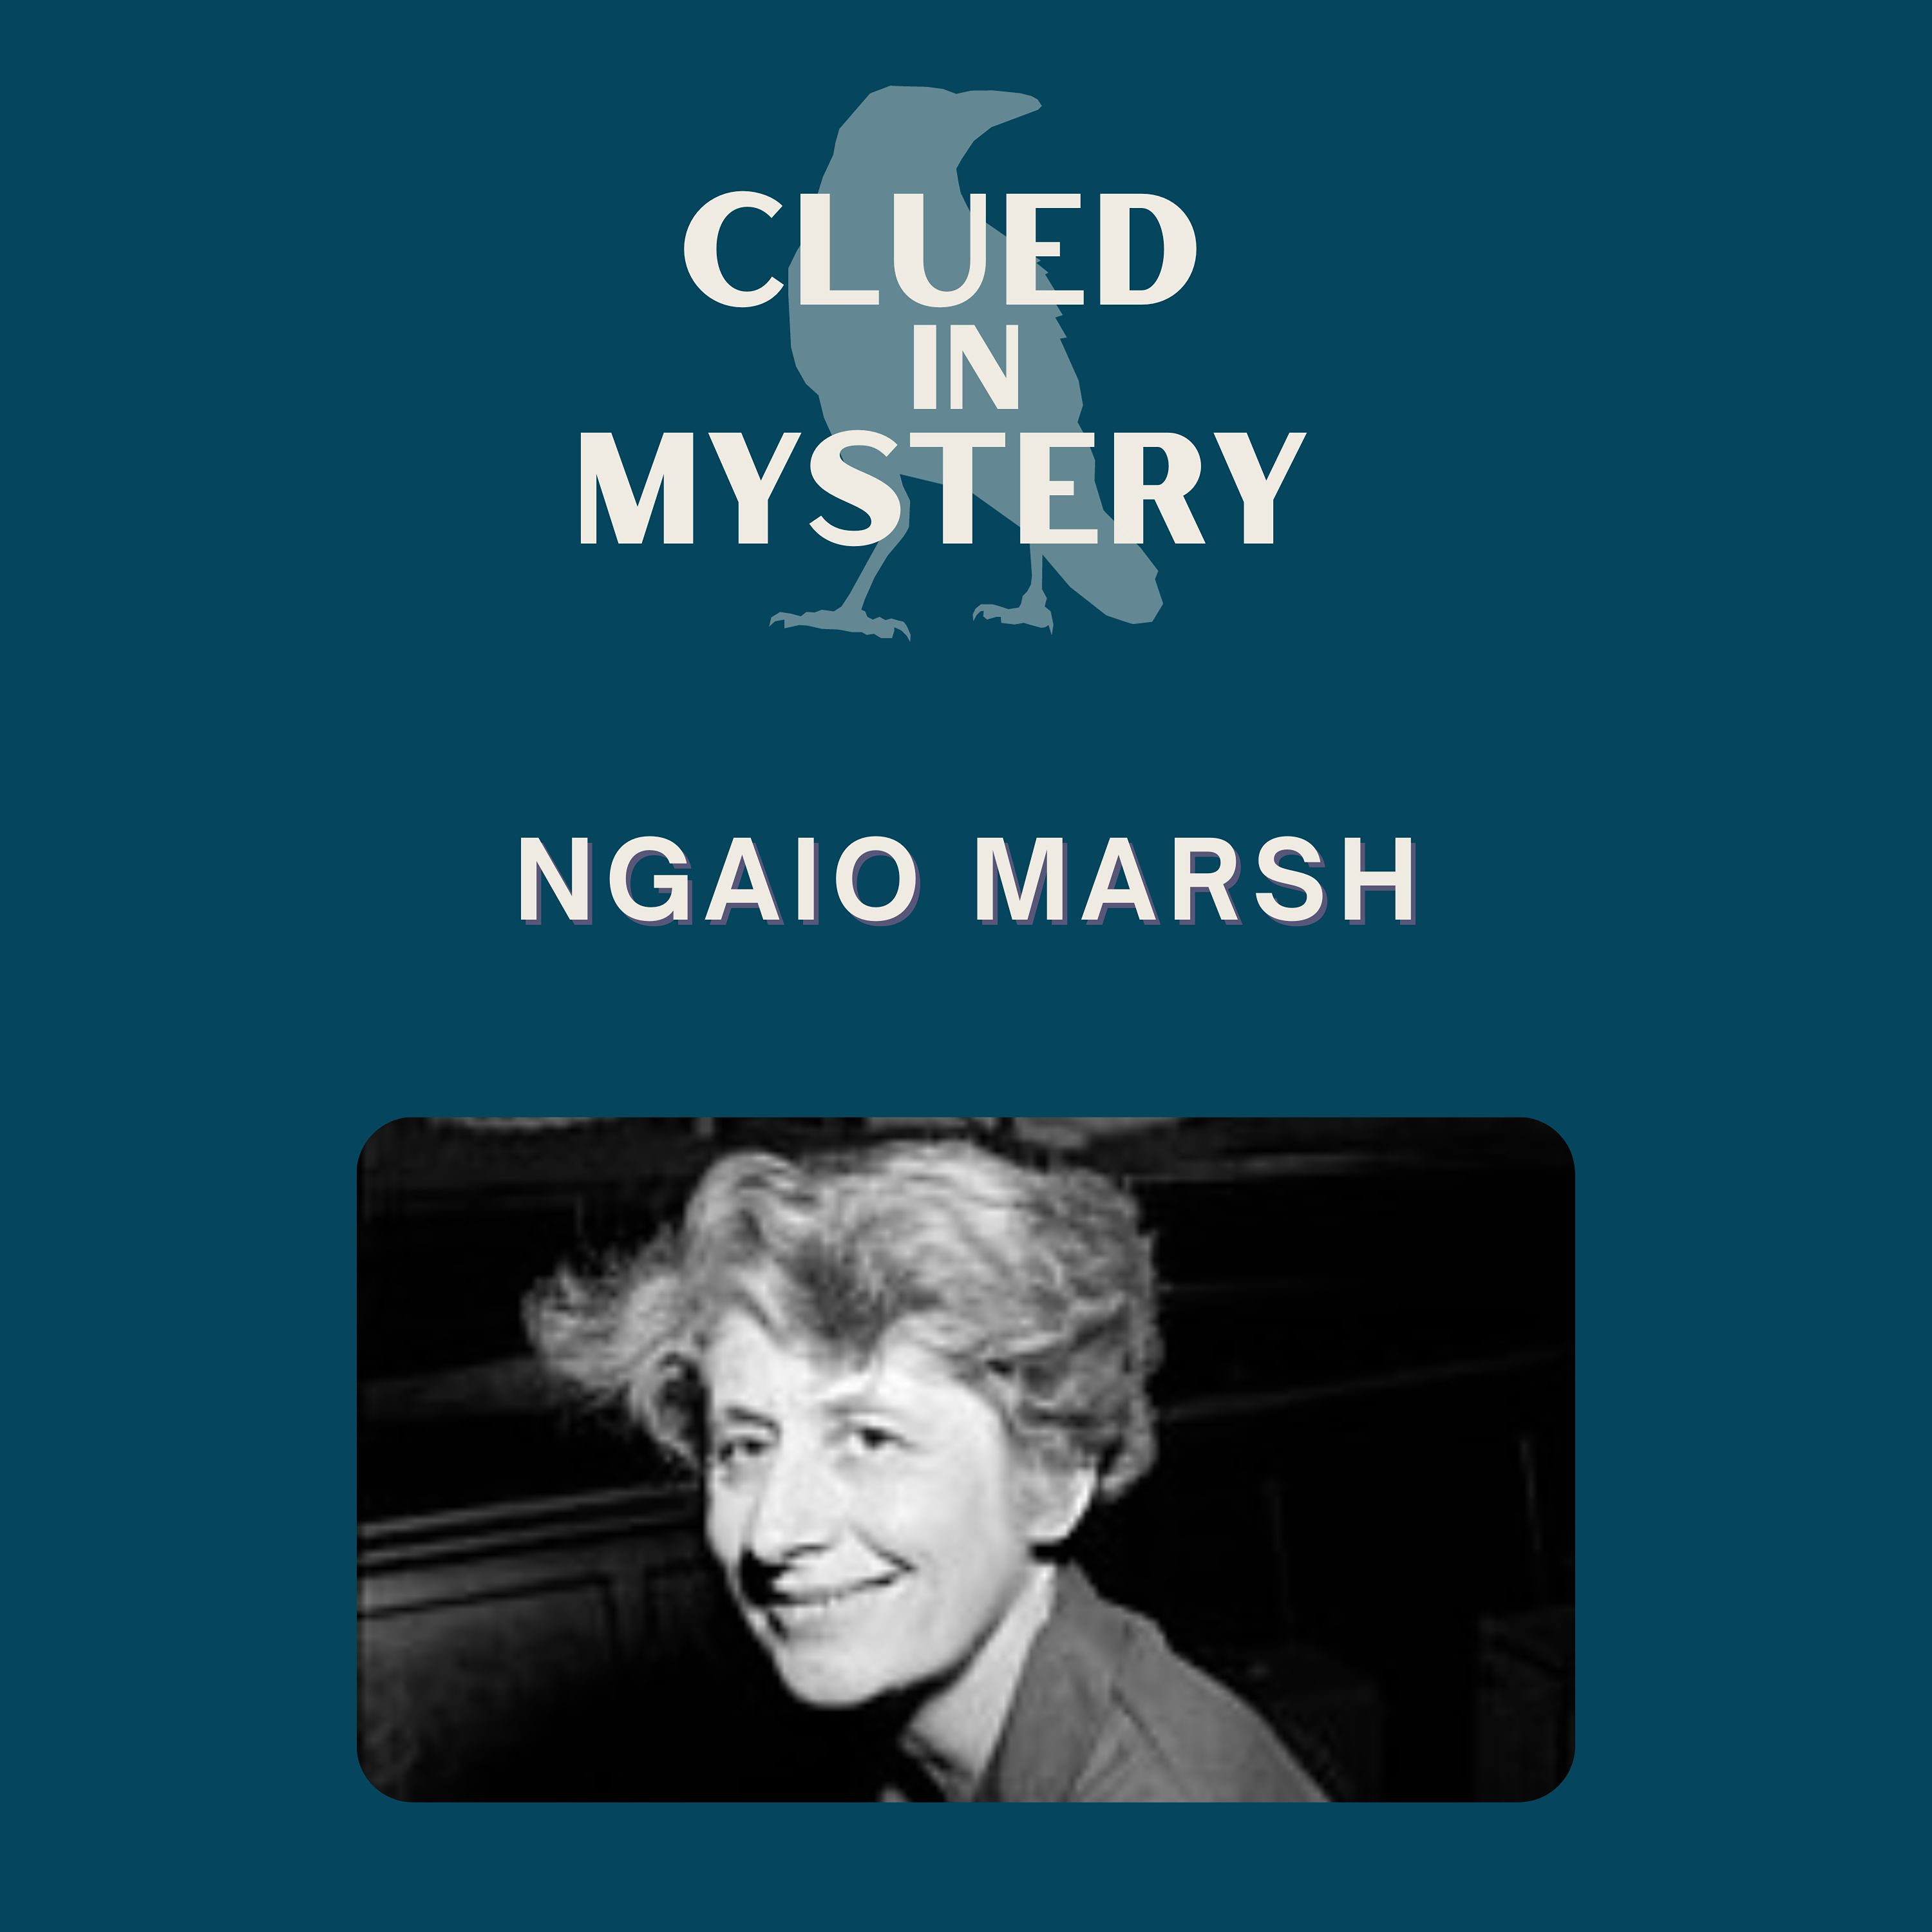 Golden Age Author Ngaio Marsh